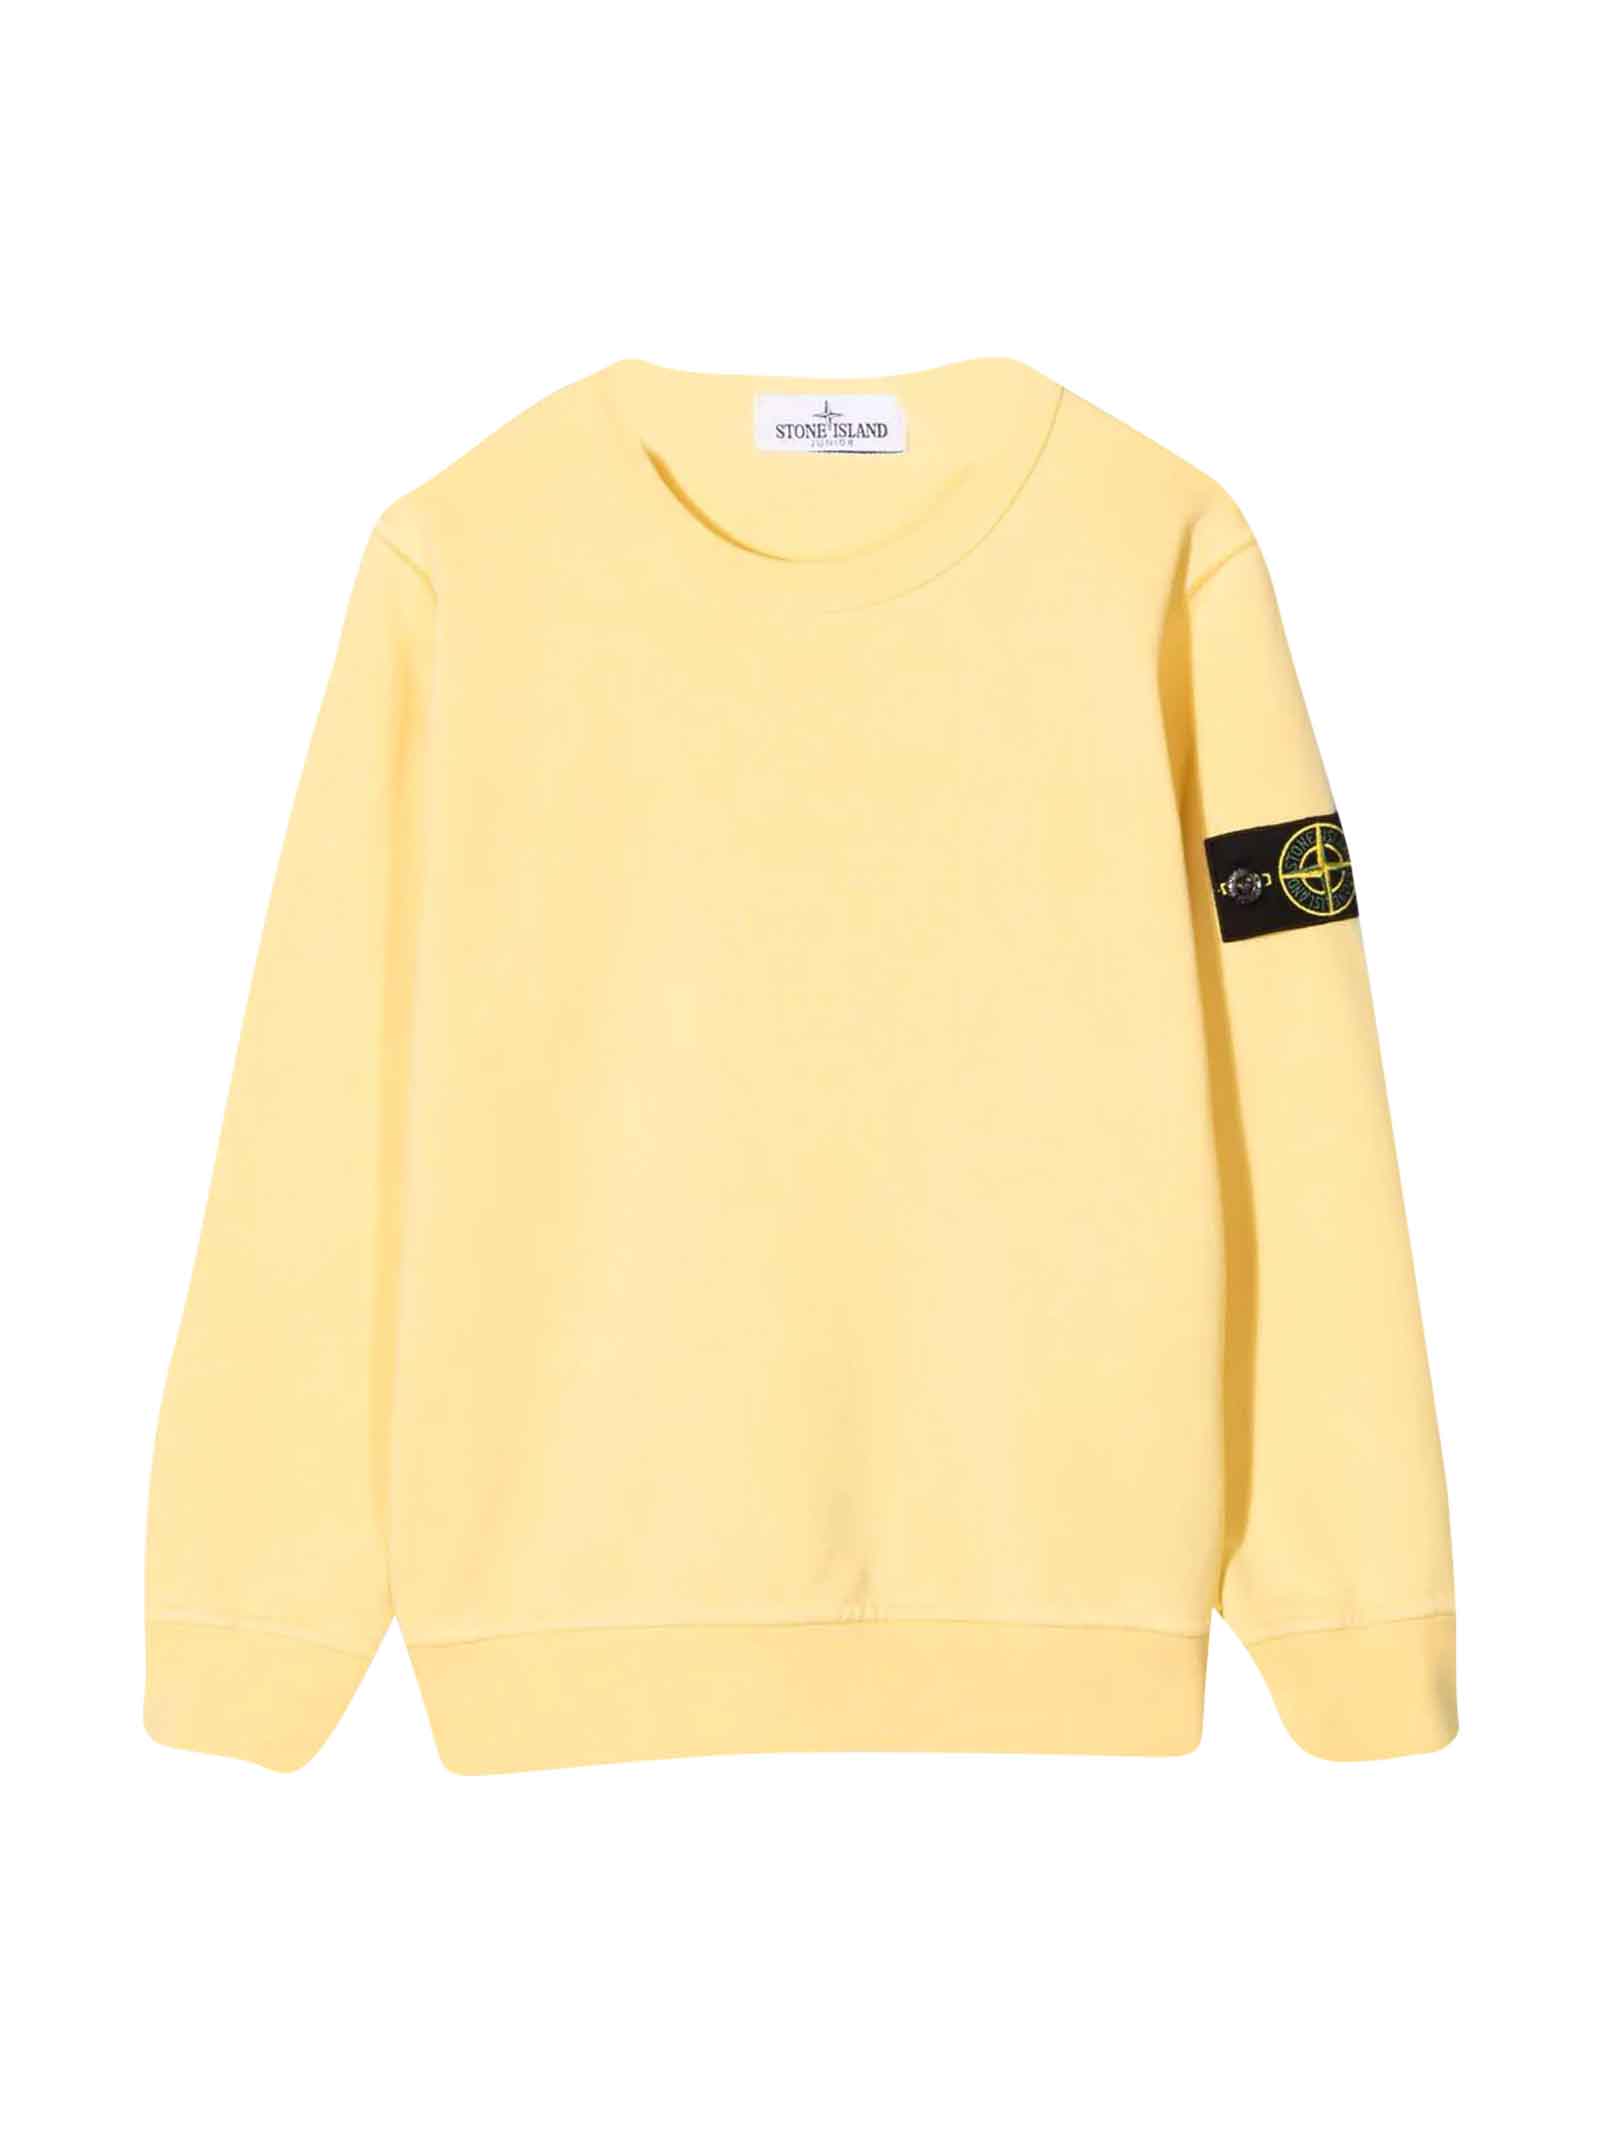 Stone Island Junior Yellow Sweatshirt Teen Boy